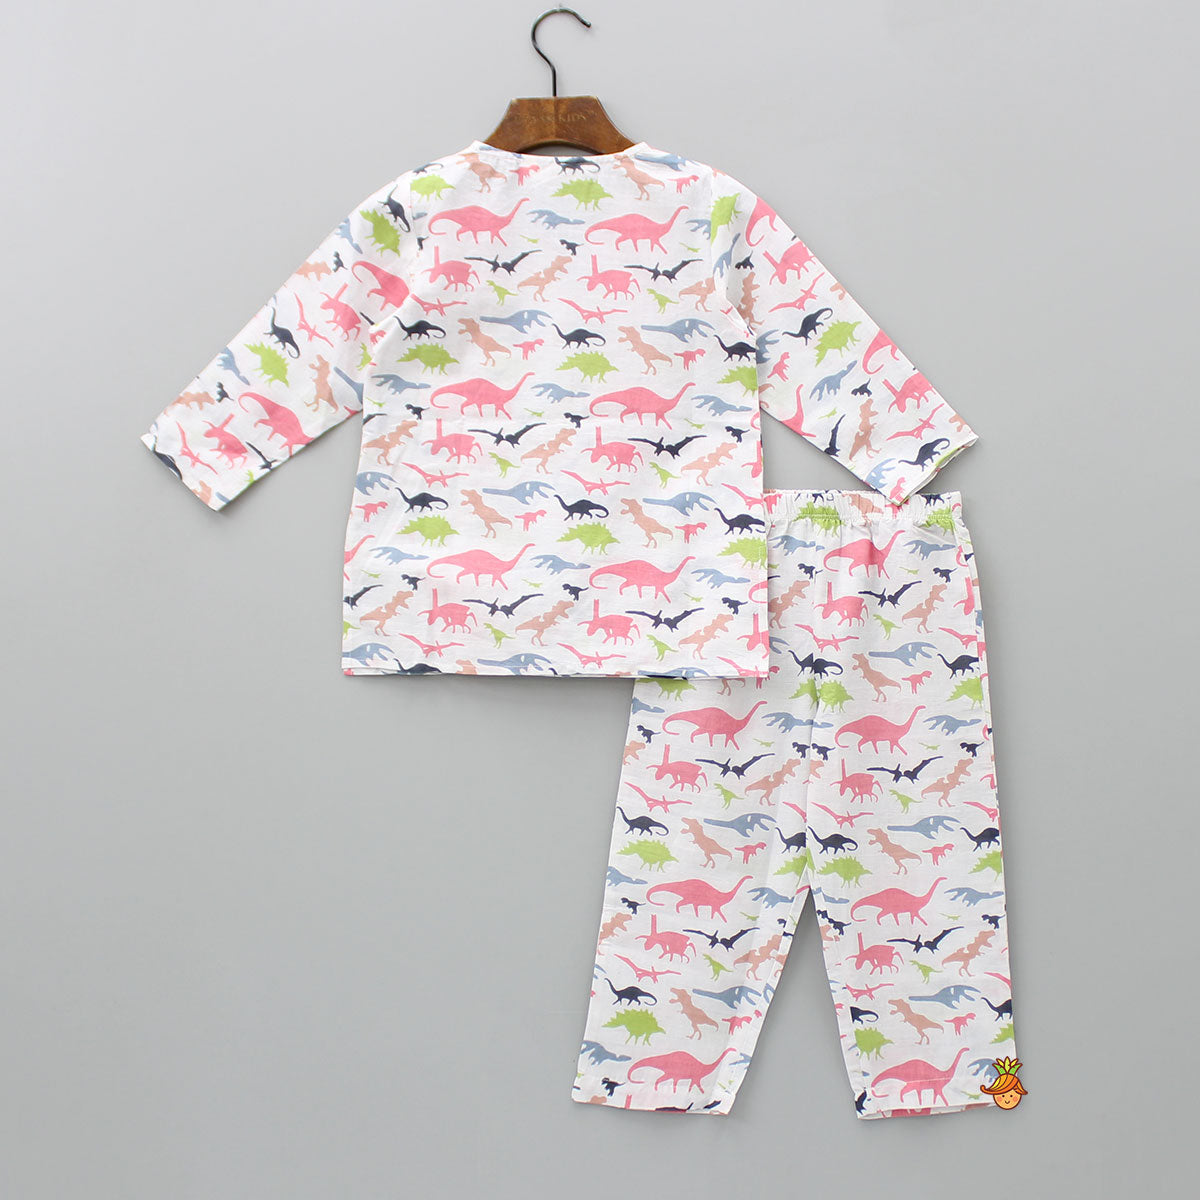 Colourful Dinosaur Printed Off White Sleepwear